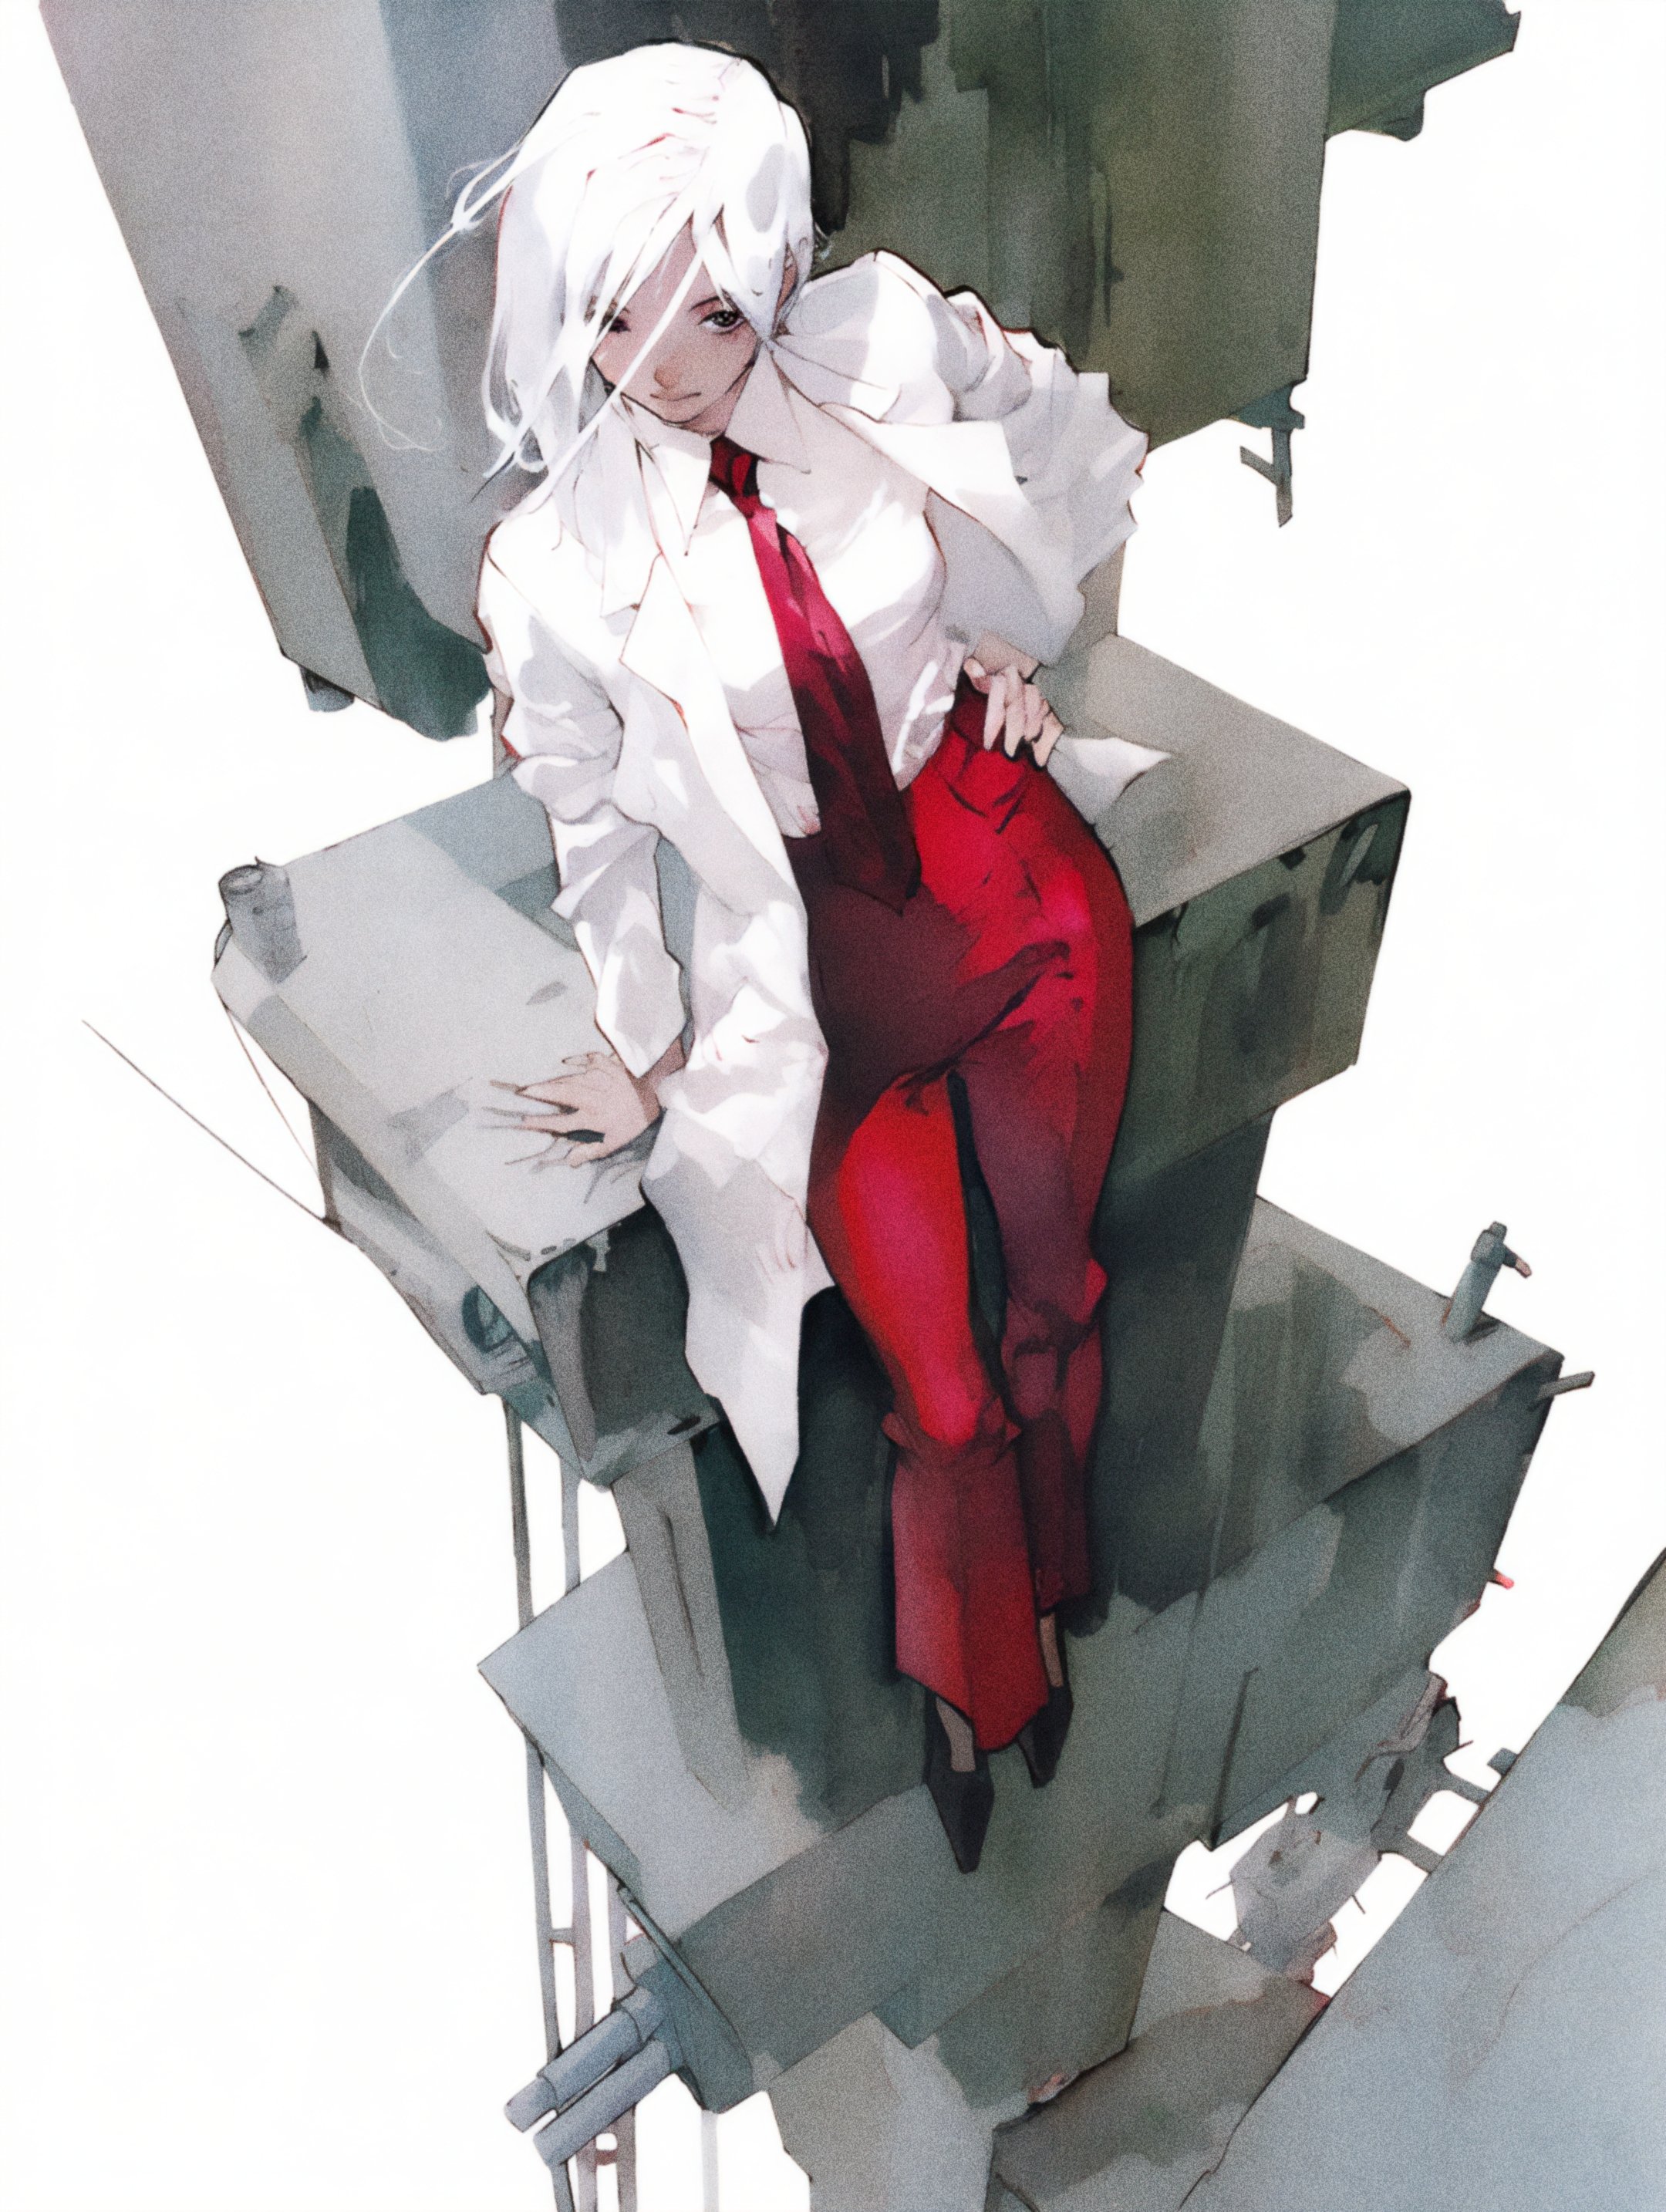 Axynchro Retro Style Anime Girls Portrait Display White Hair Sitting Tie Hands On Hips Jacket White  2160x2868